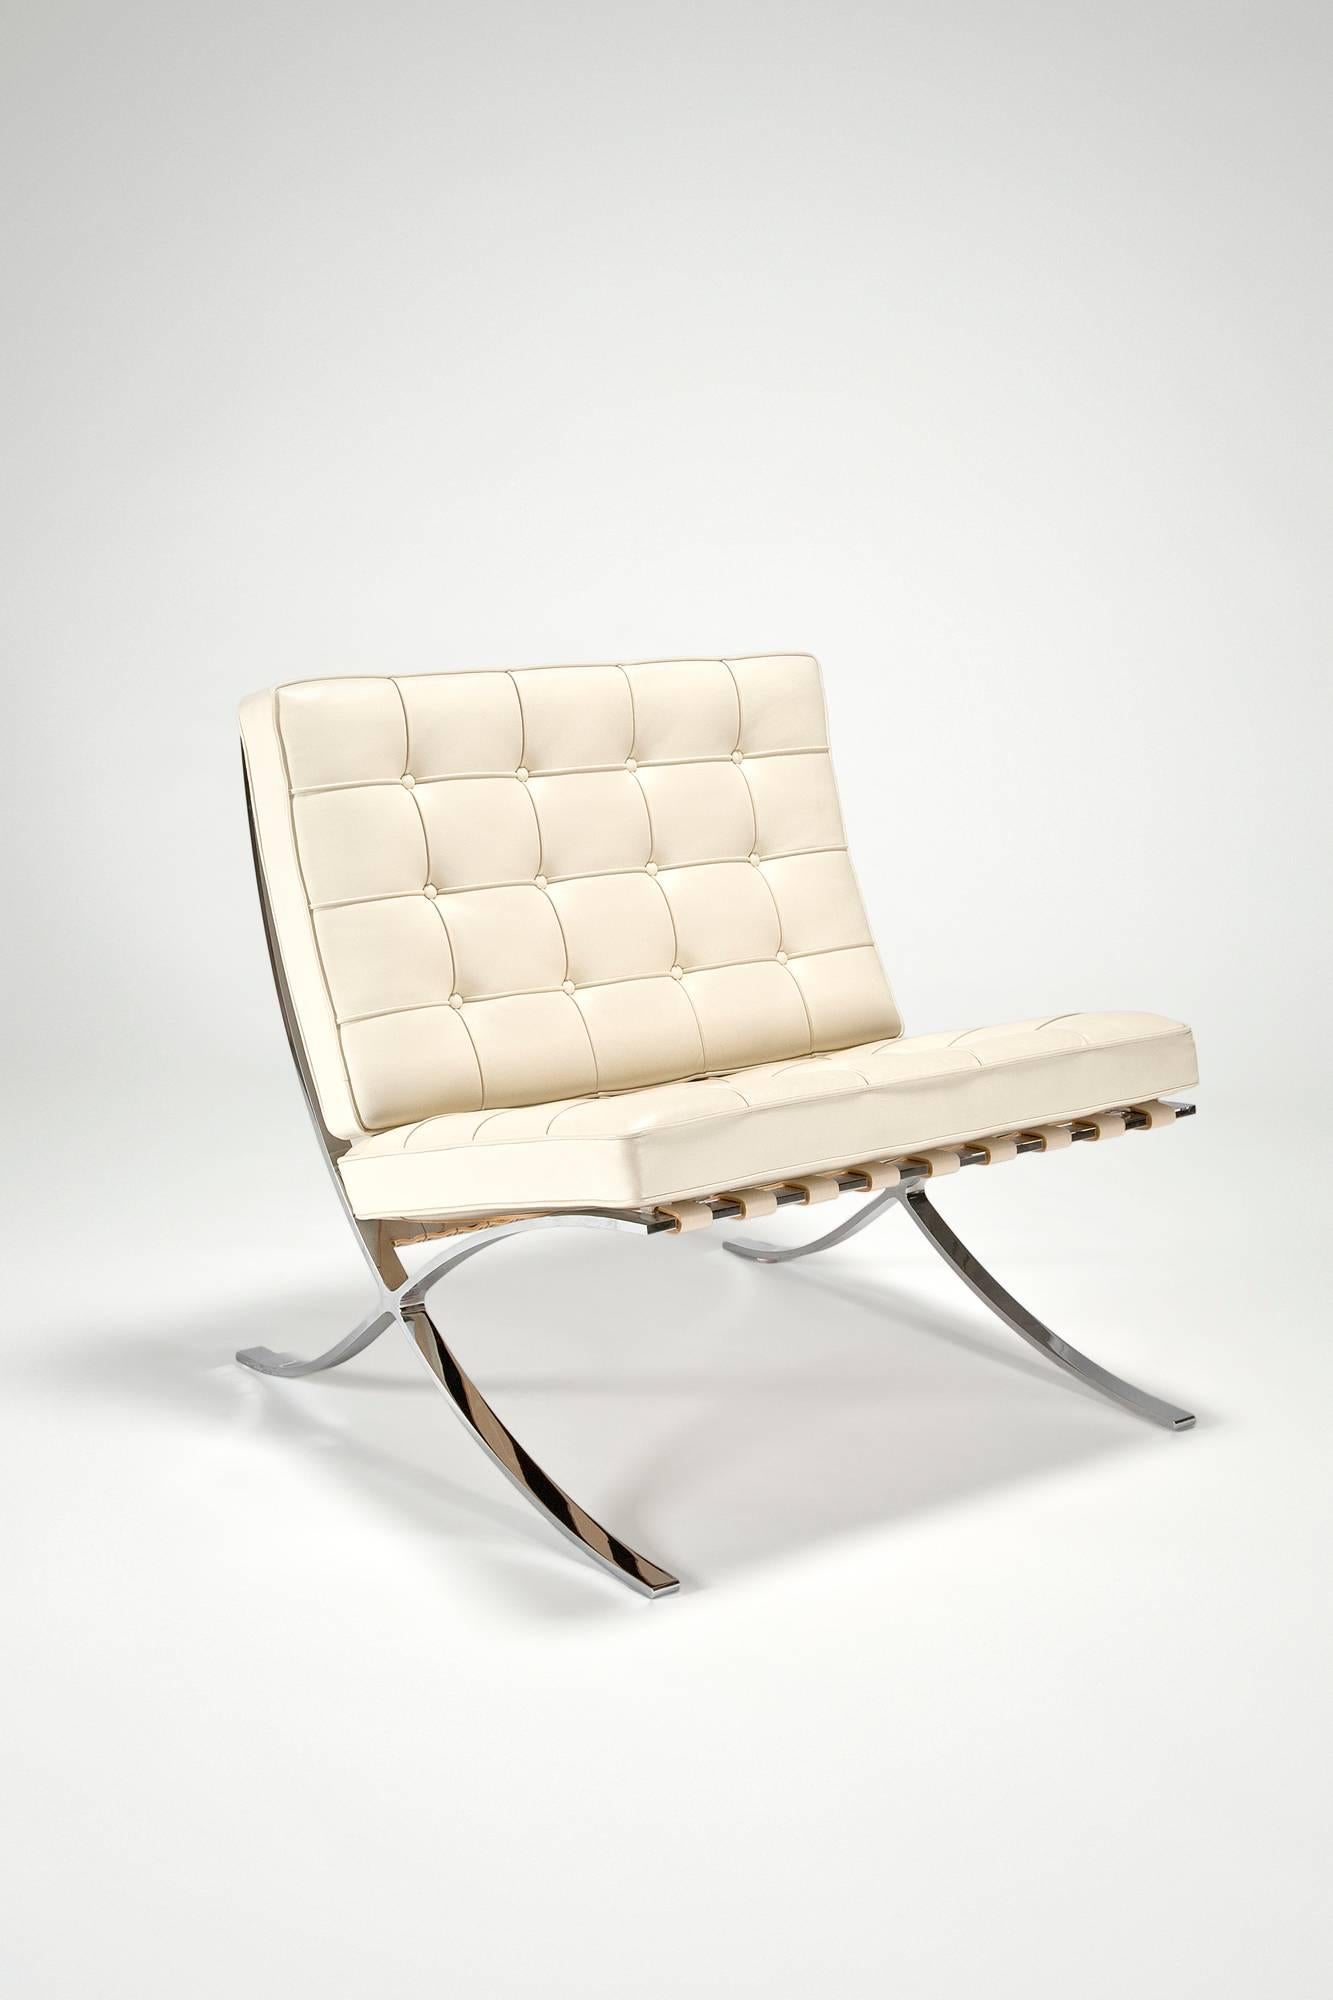 Bauhaus Barcelona Chair and Ottoman by Ludwig Mies van der Rohe